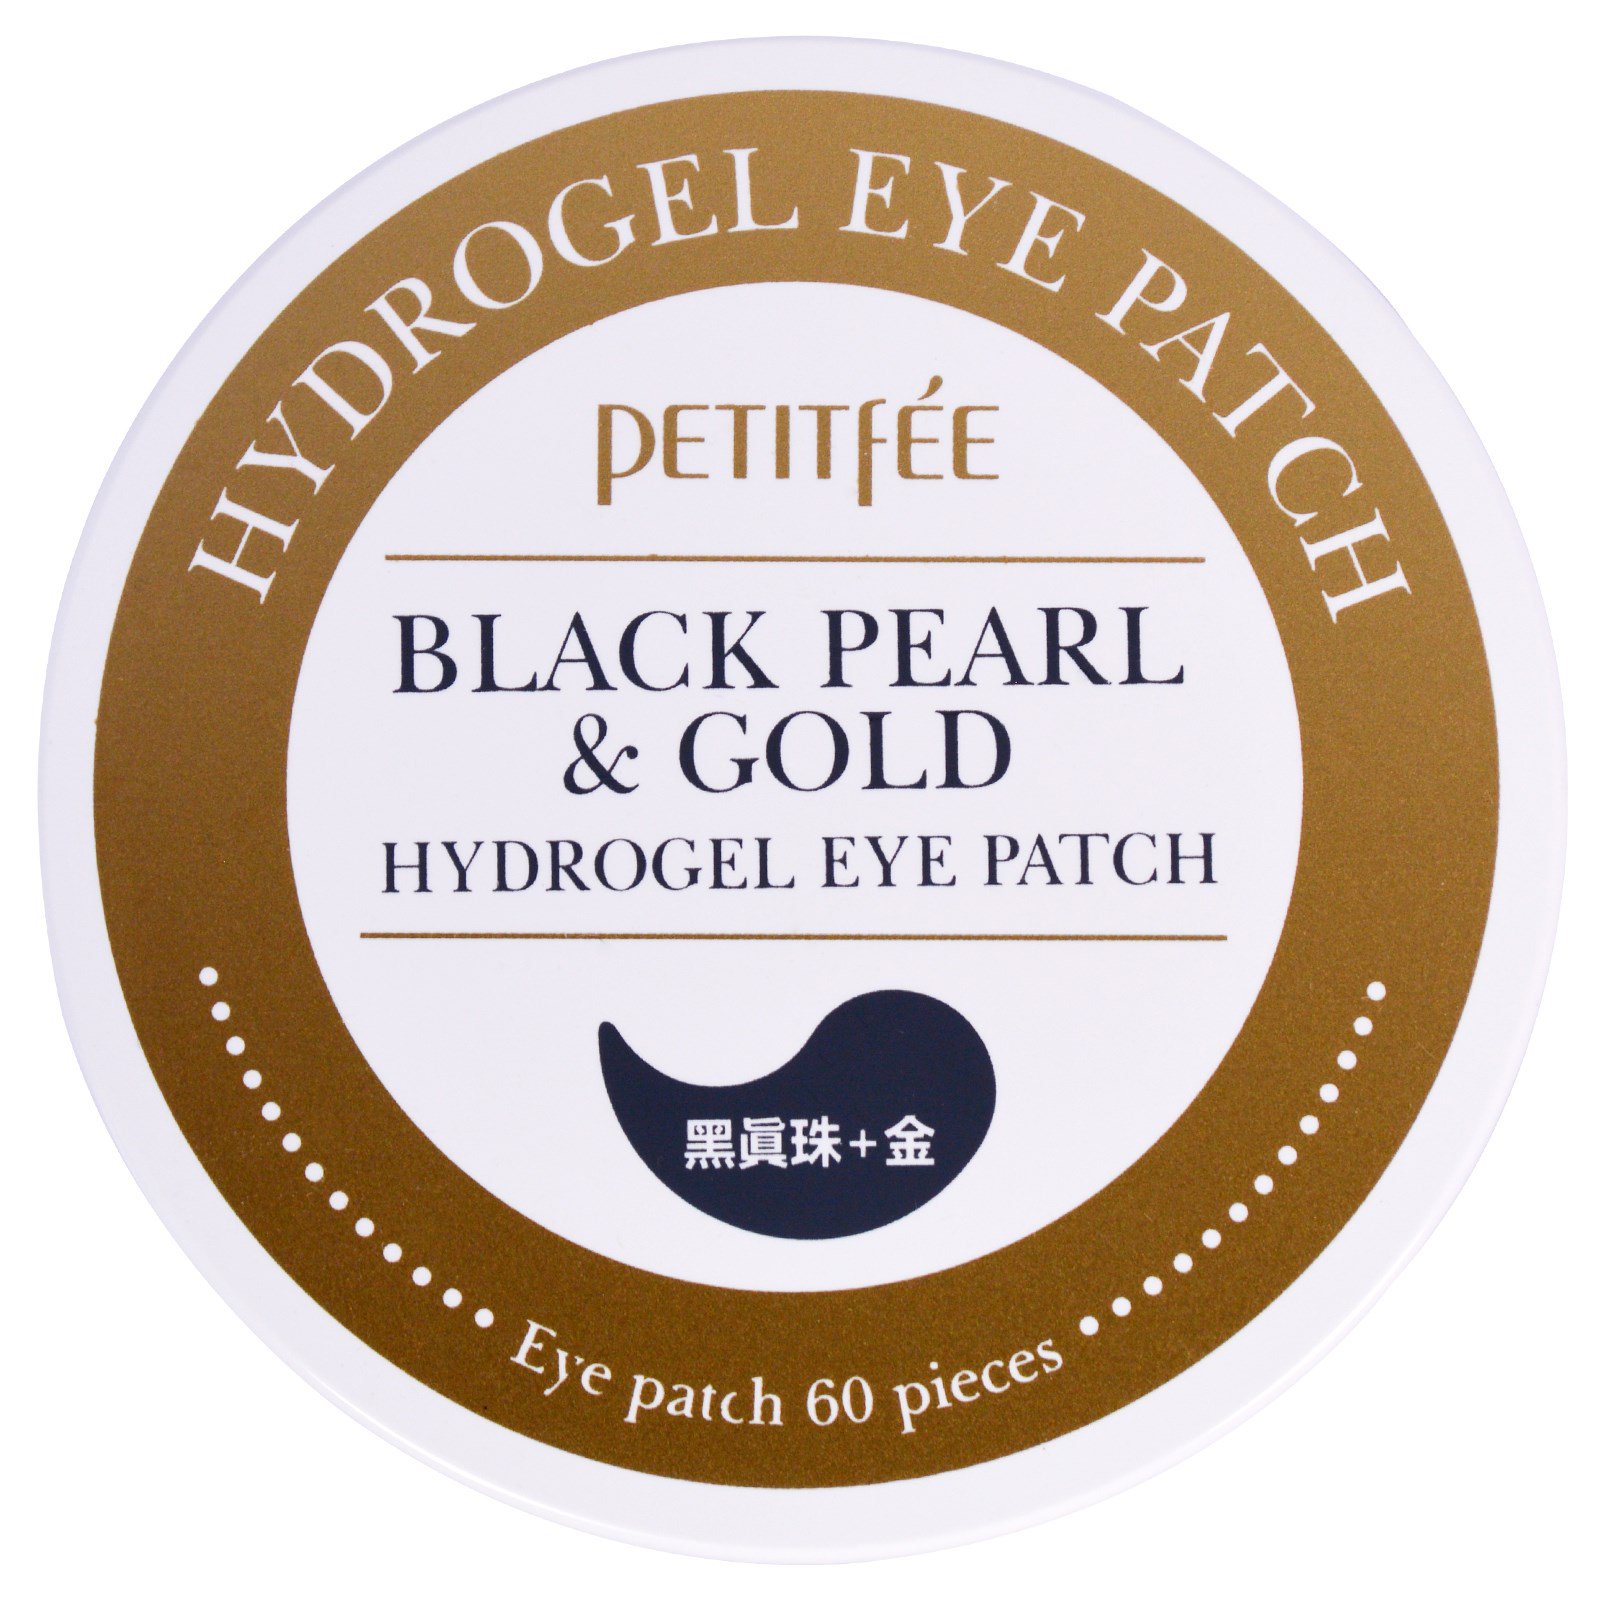 petitfee black pearl & gold eye patch патчи для глаз отзыв